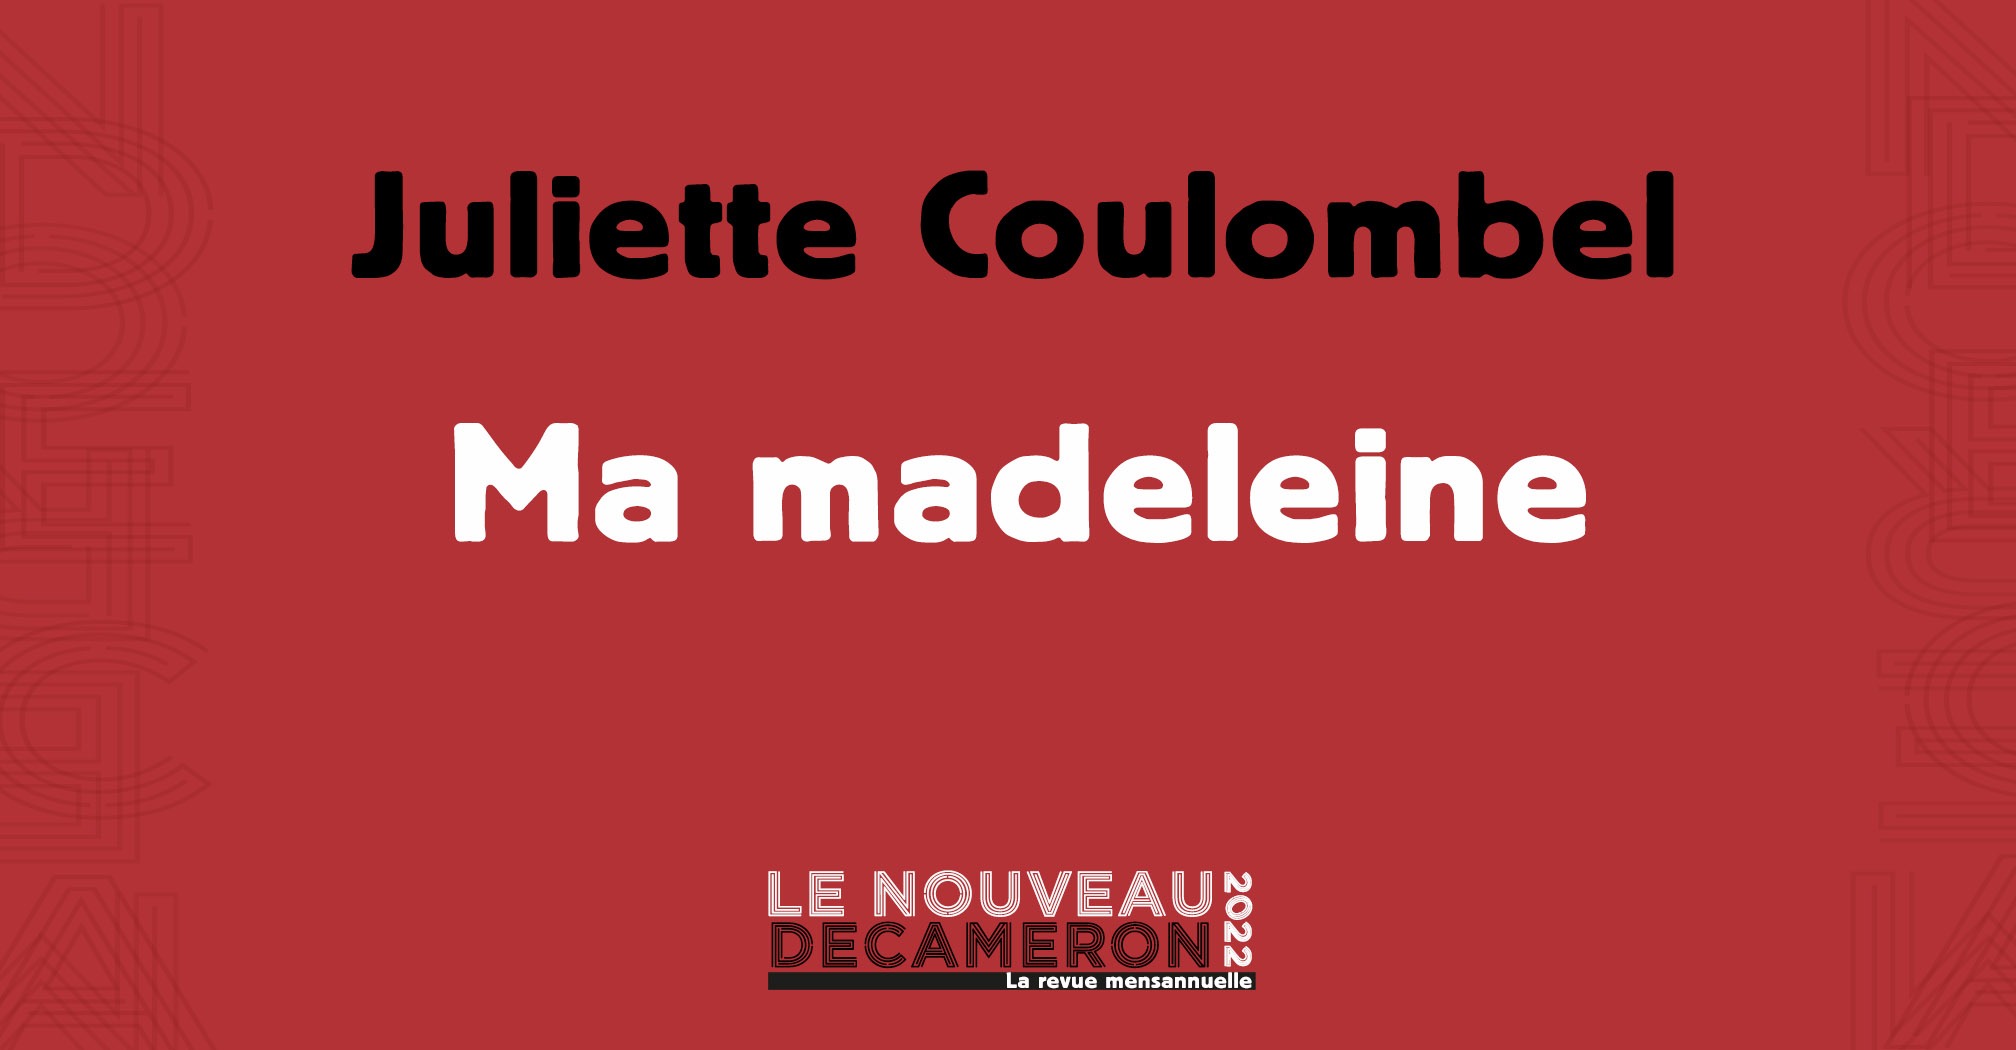 Juliette Coulombel - Ma madeleine